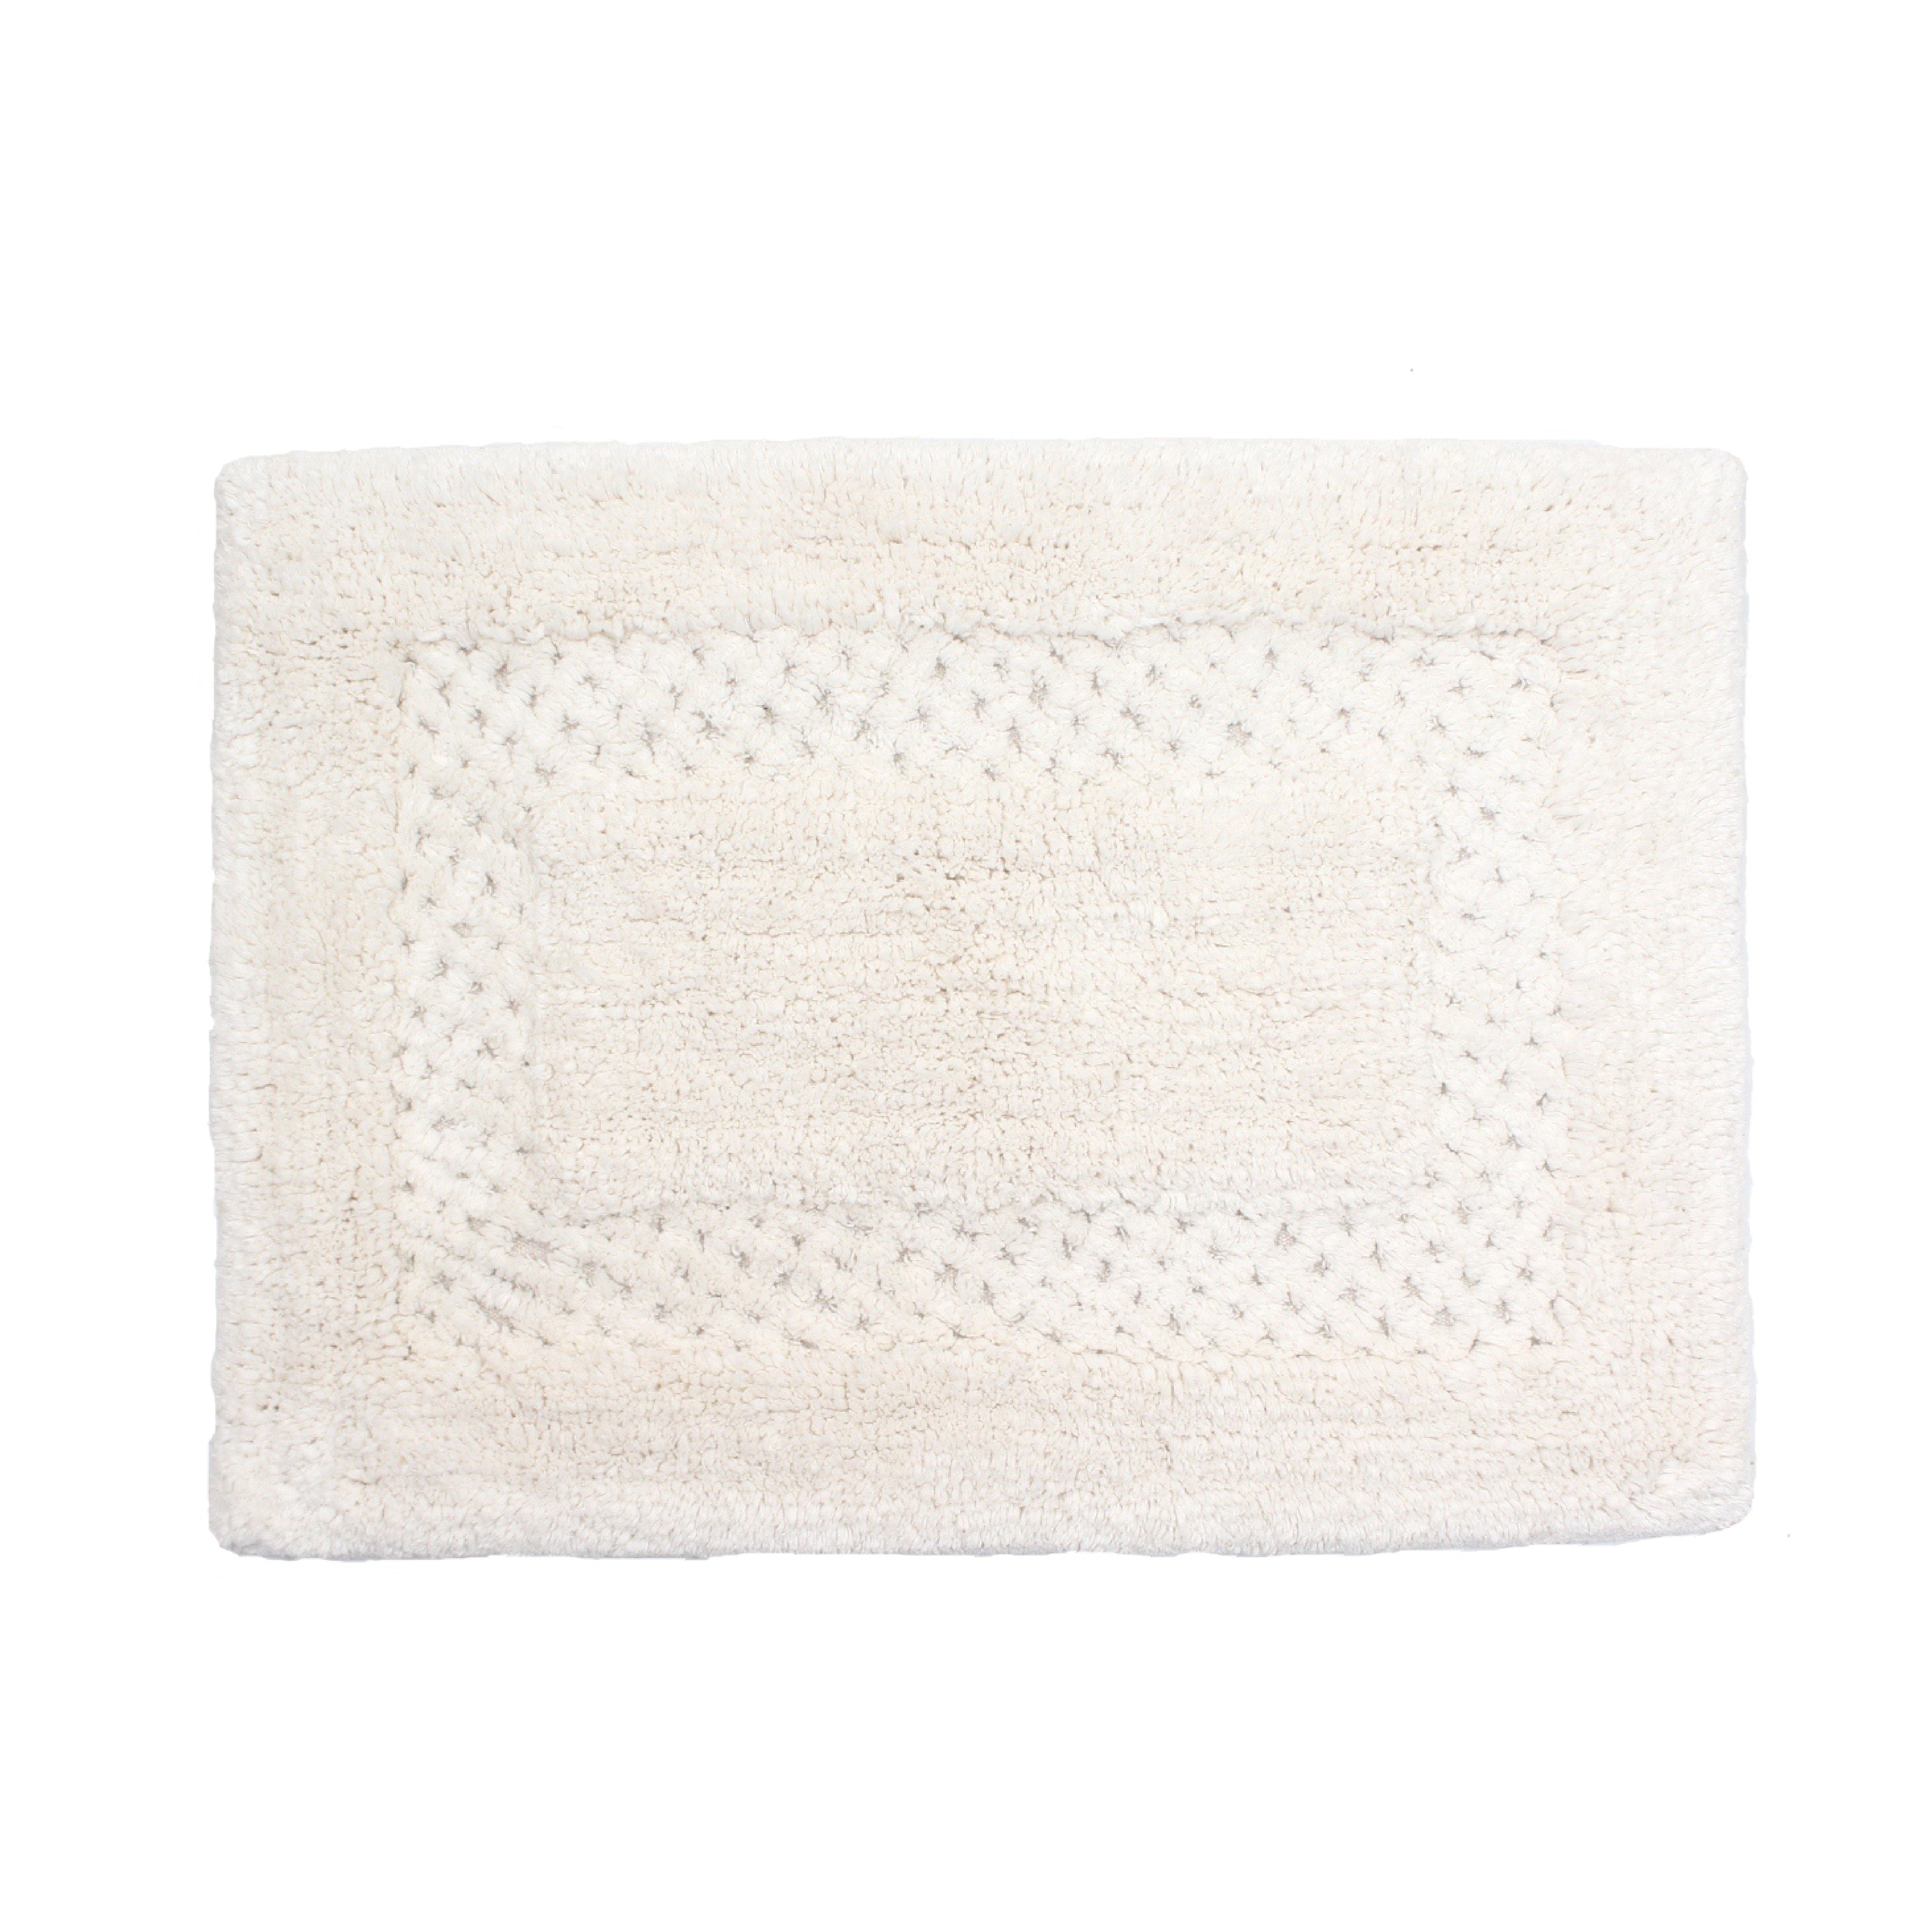 Home Weavers Classy Bathmat Rugs 3 Piece Set - Ivory